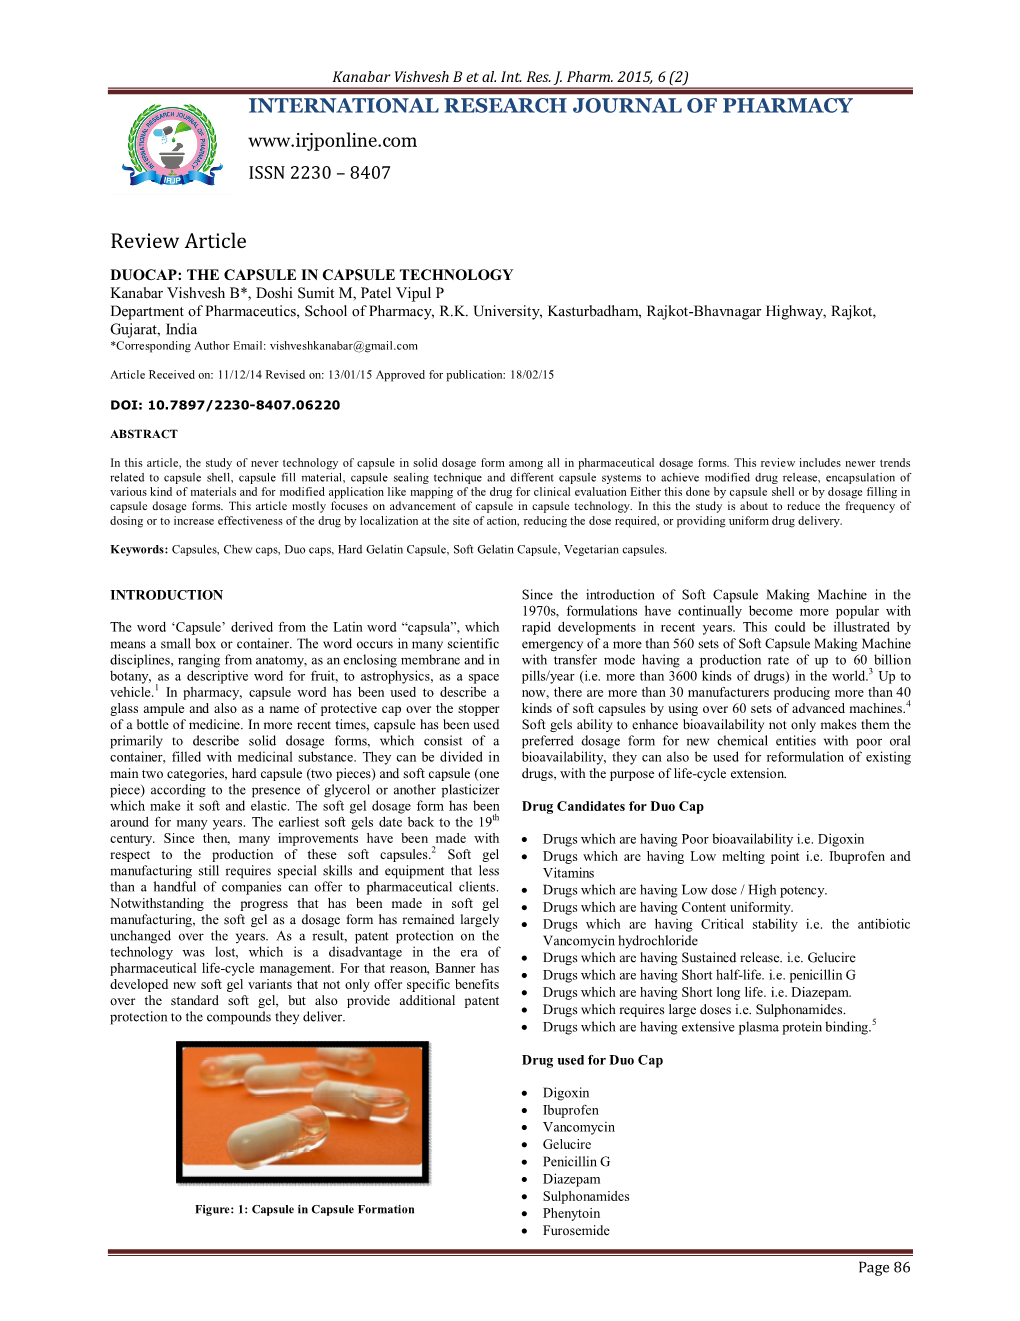 Review Article DUOCAP: the CAPSULE in CAPSULE TECHNOLOGY Kanabar Vishvesh B*, Doshi Sumit M, Patel Vipul P Department of Pharmaceutics, School of Pharmacy, R.K